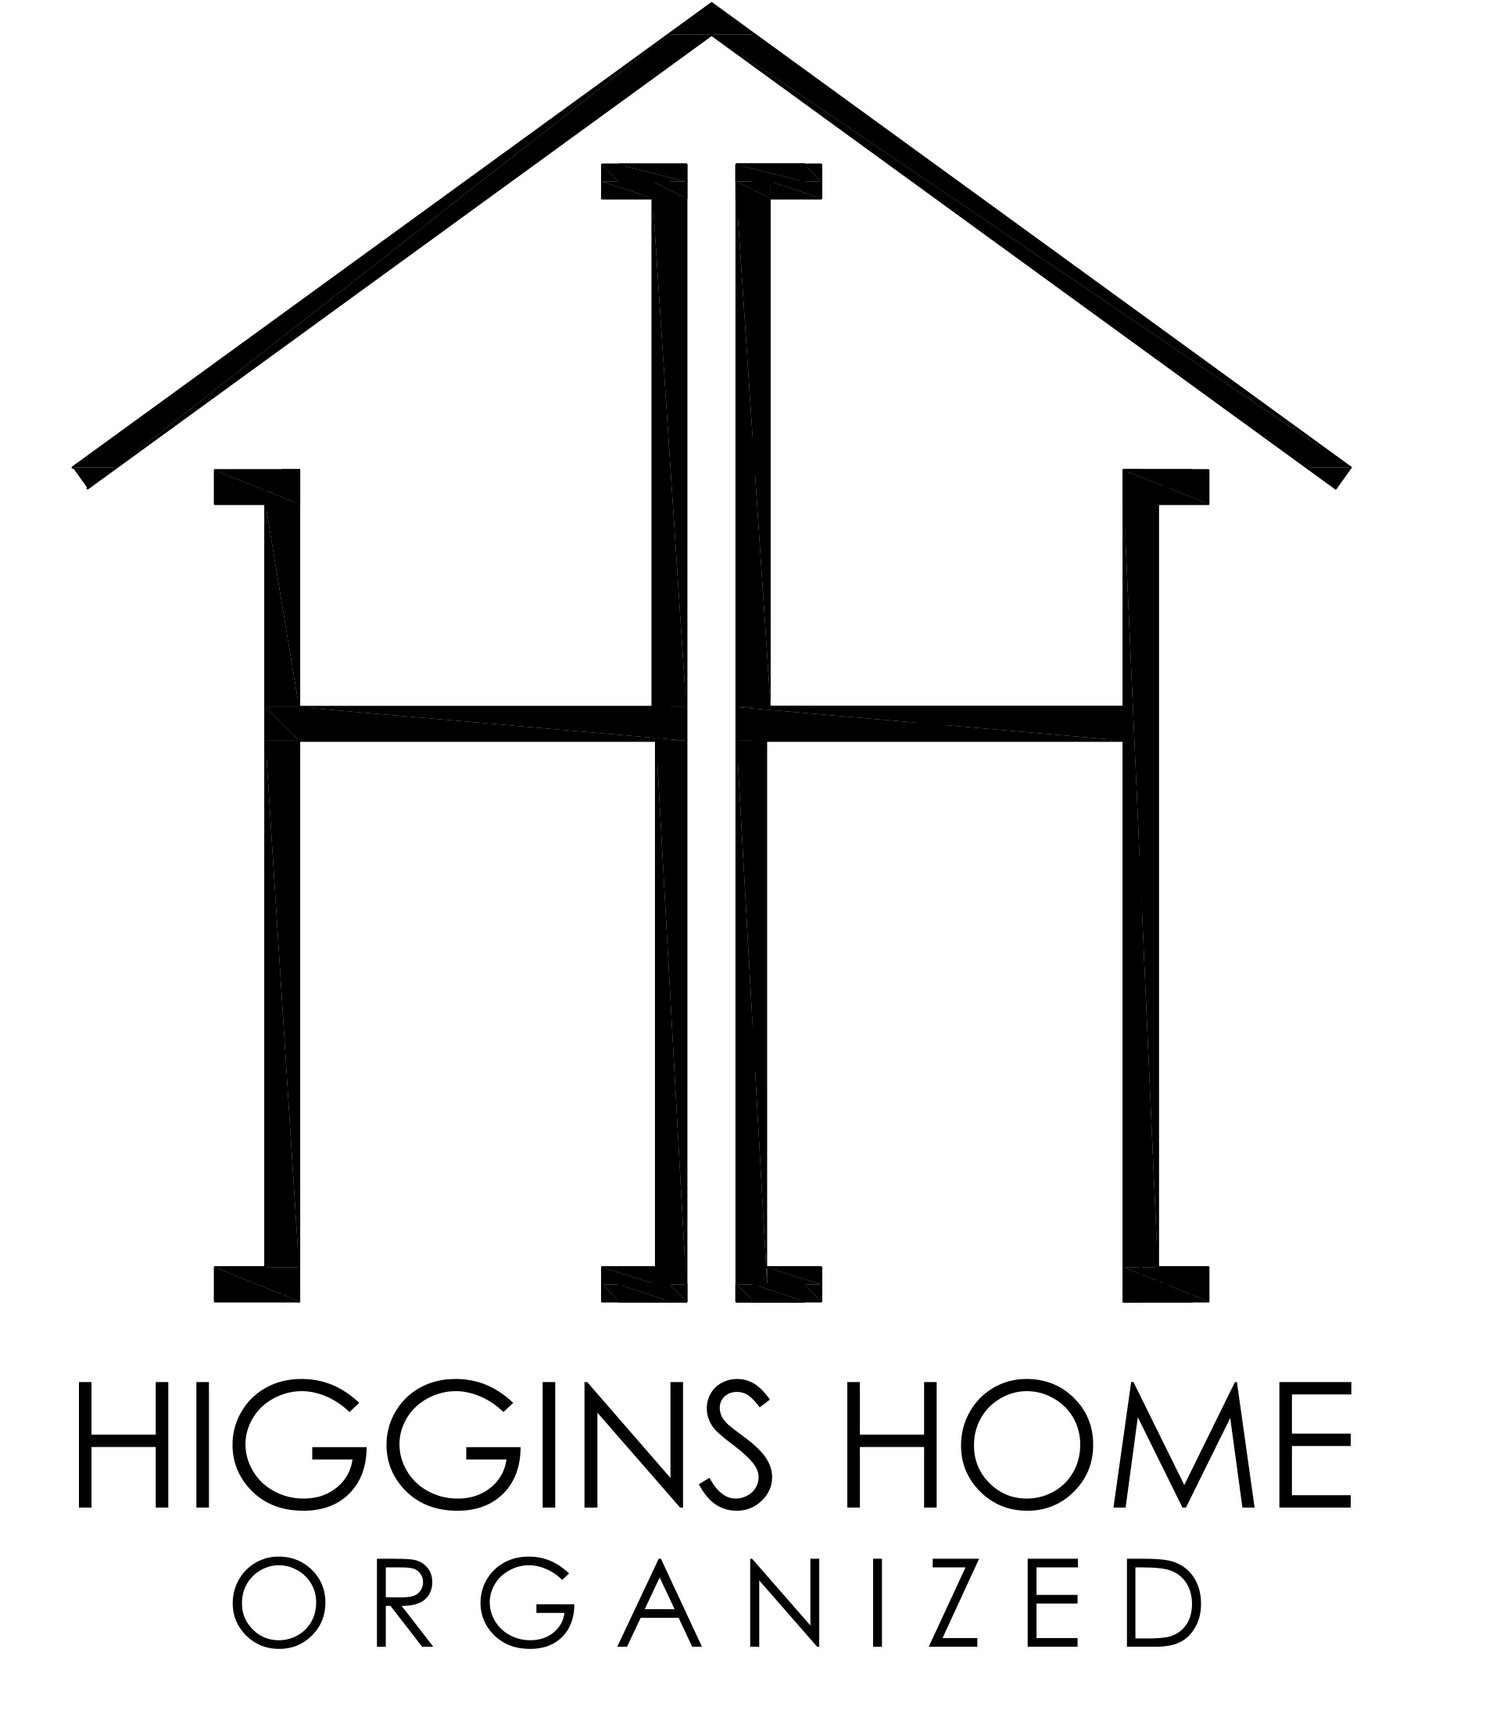 Higgins Home Organized